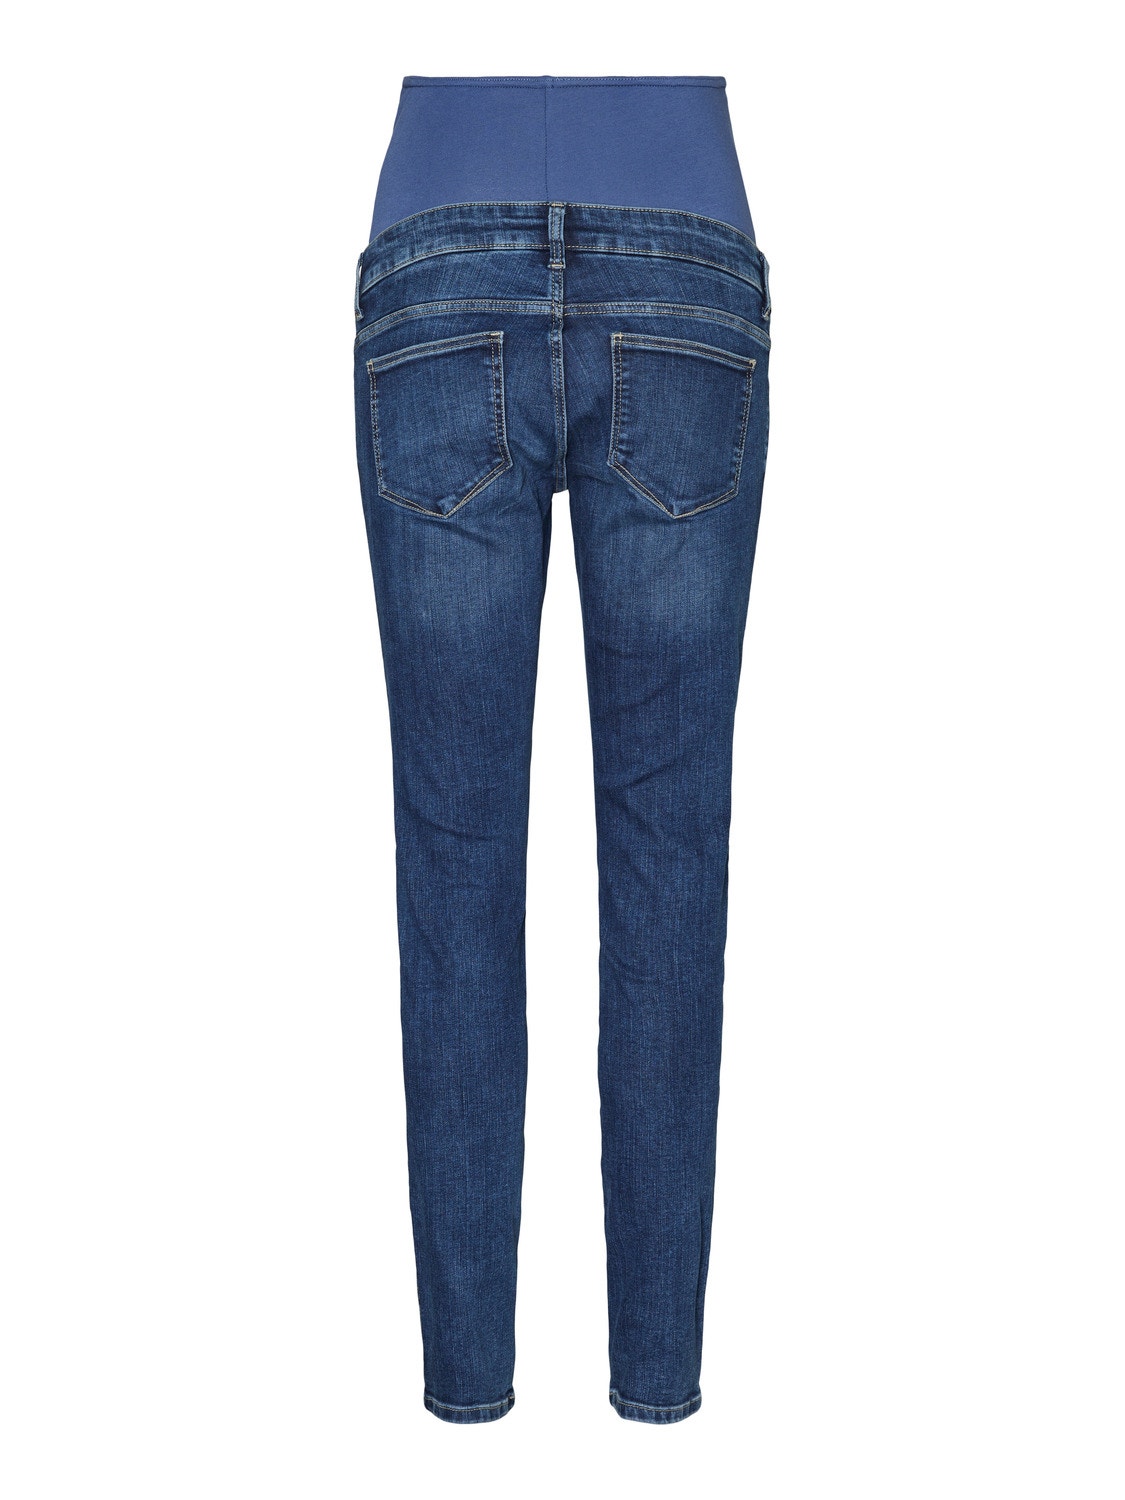 MAMA.LICIOUS Jeans Regular Fit Vita media -Medium Blue Denim - 20019524